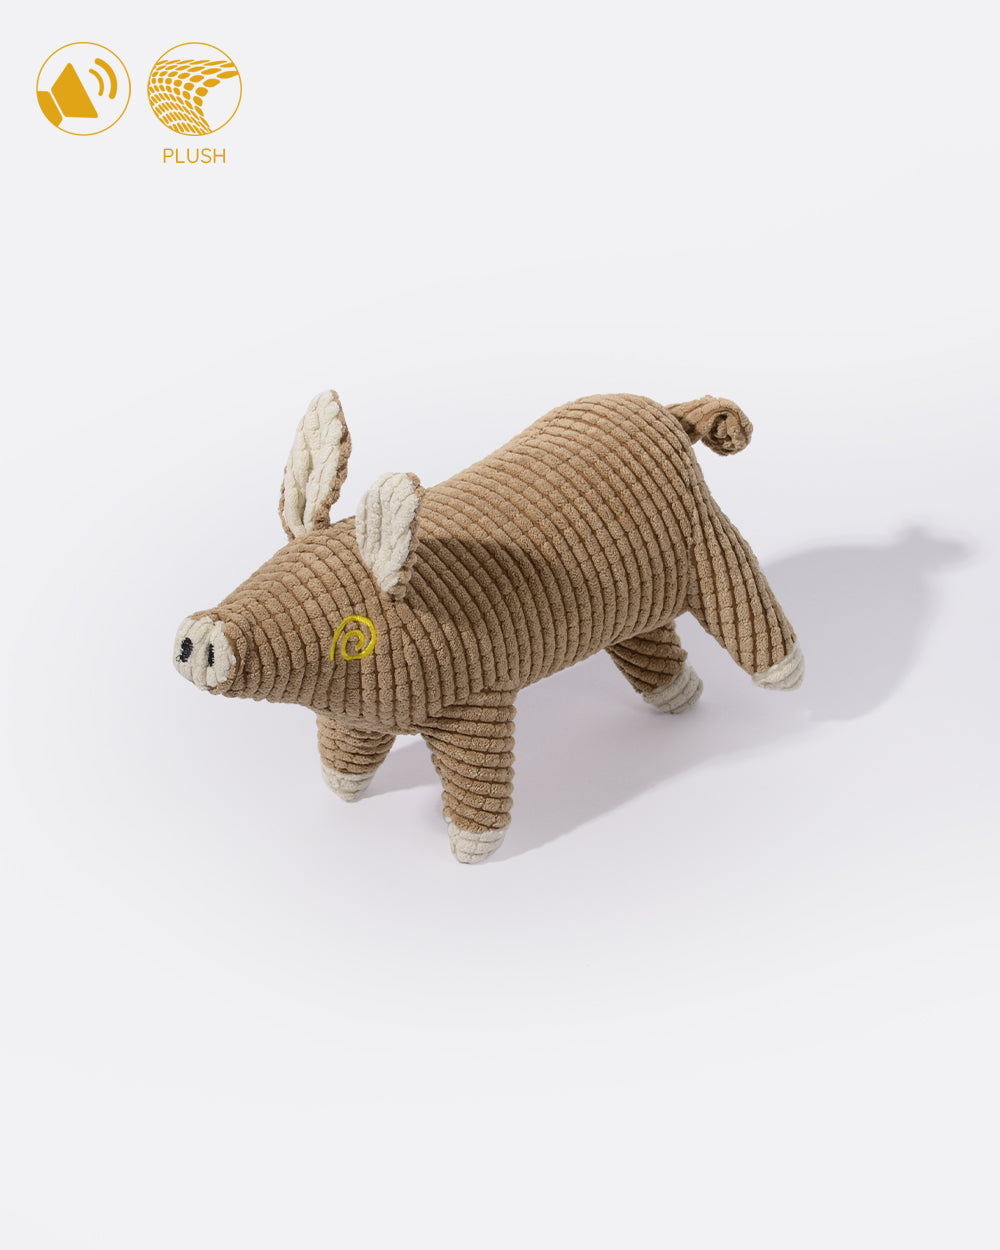 Plush Squeaky Dog Toy - Brown Pig